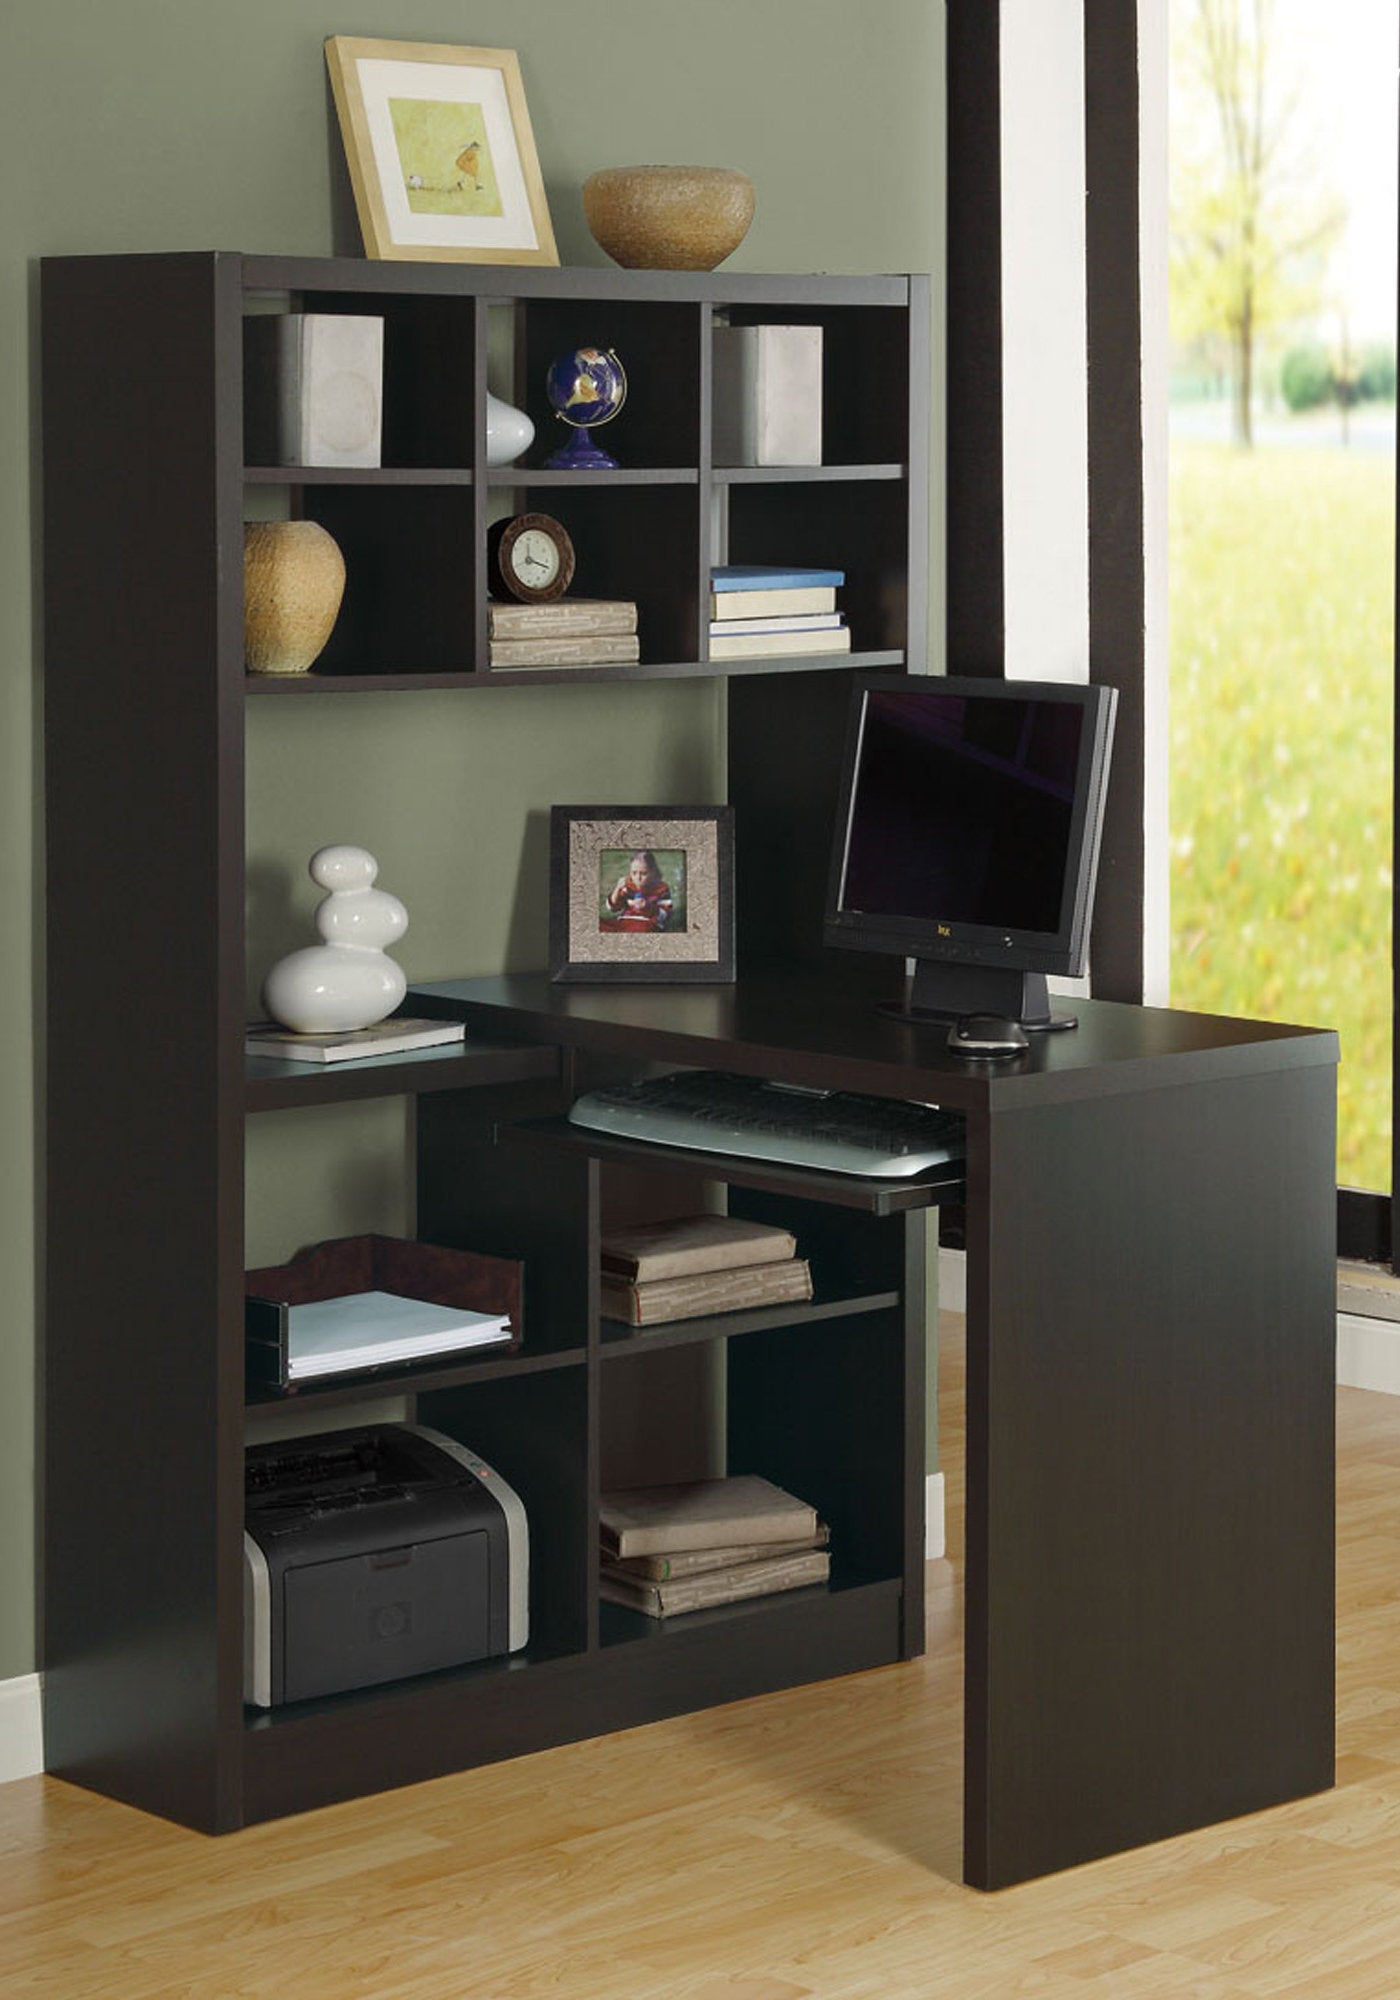 MN-707021    Computer Desk, Home Office, Bookcase, Corner, Storage Shelves, Left, Right Set-Up, L Shape, Laminate, Dark Brown, Contemporary, Modern